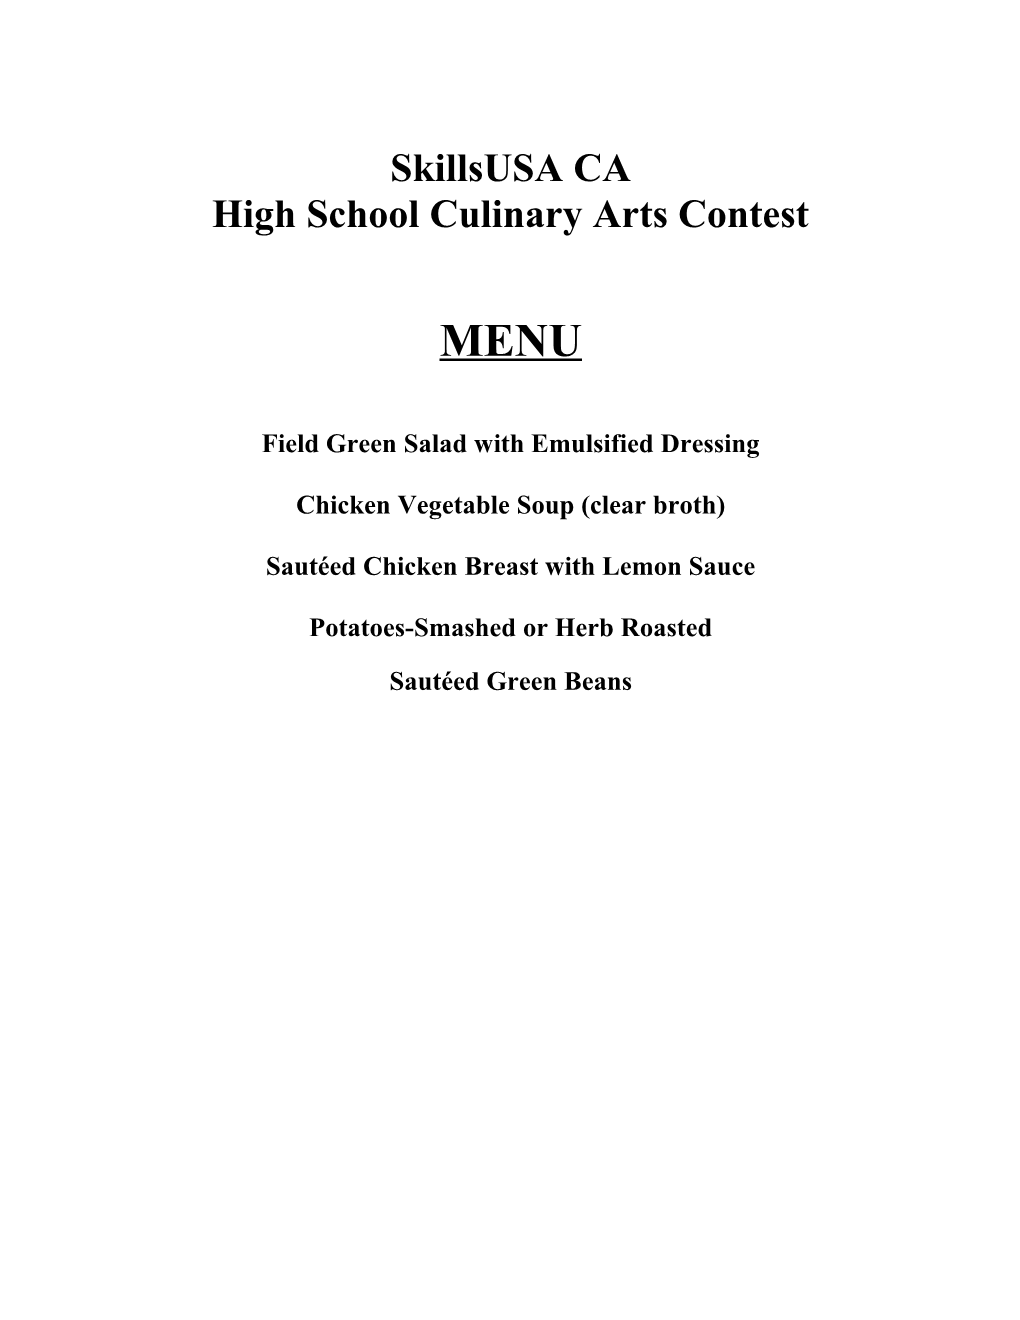 High School Culinary Arts Contest